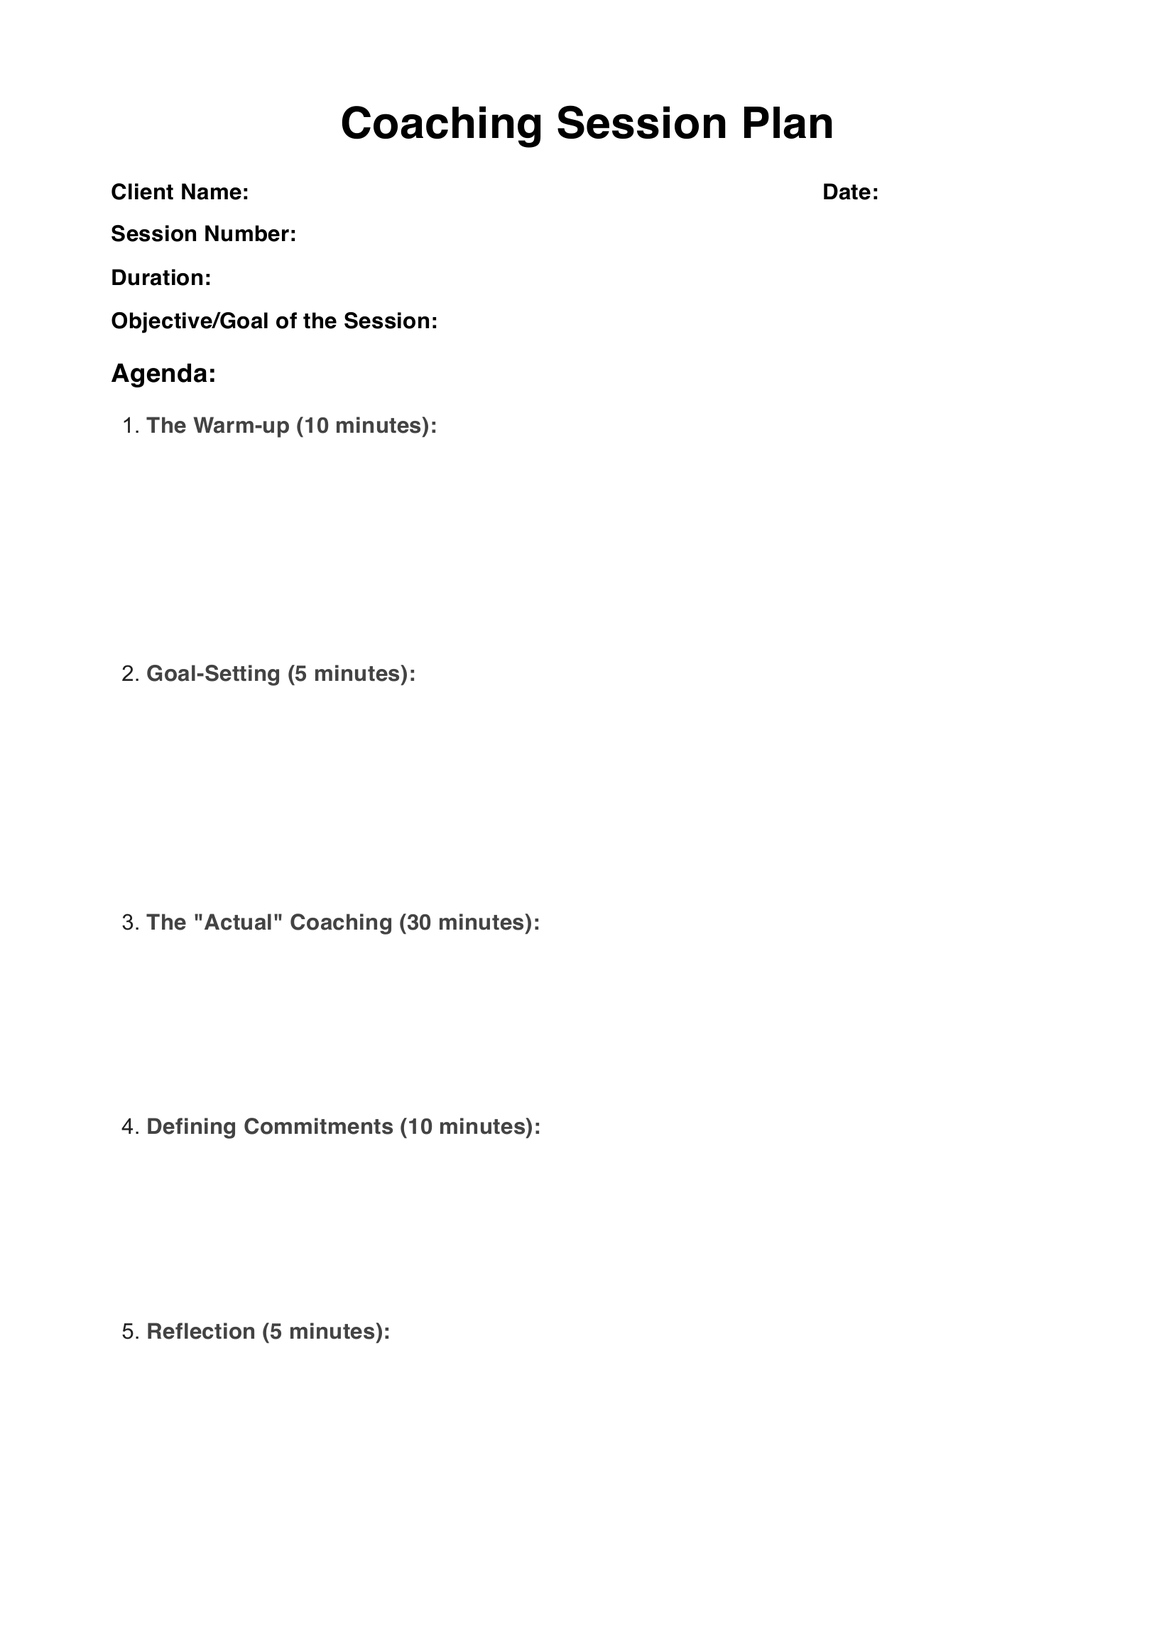 Coaching Session Plan PDF Example